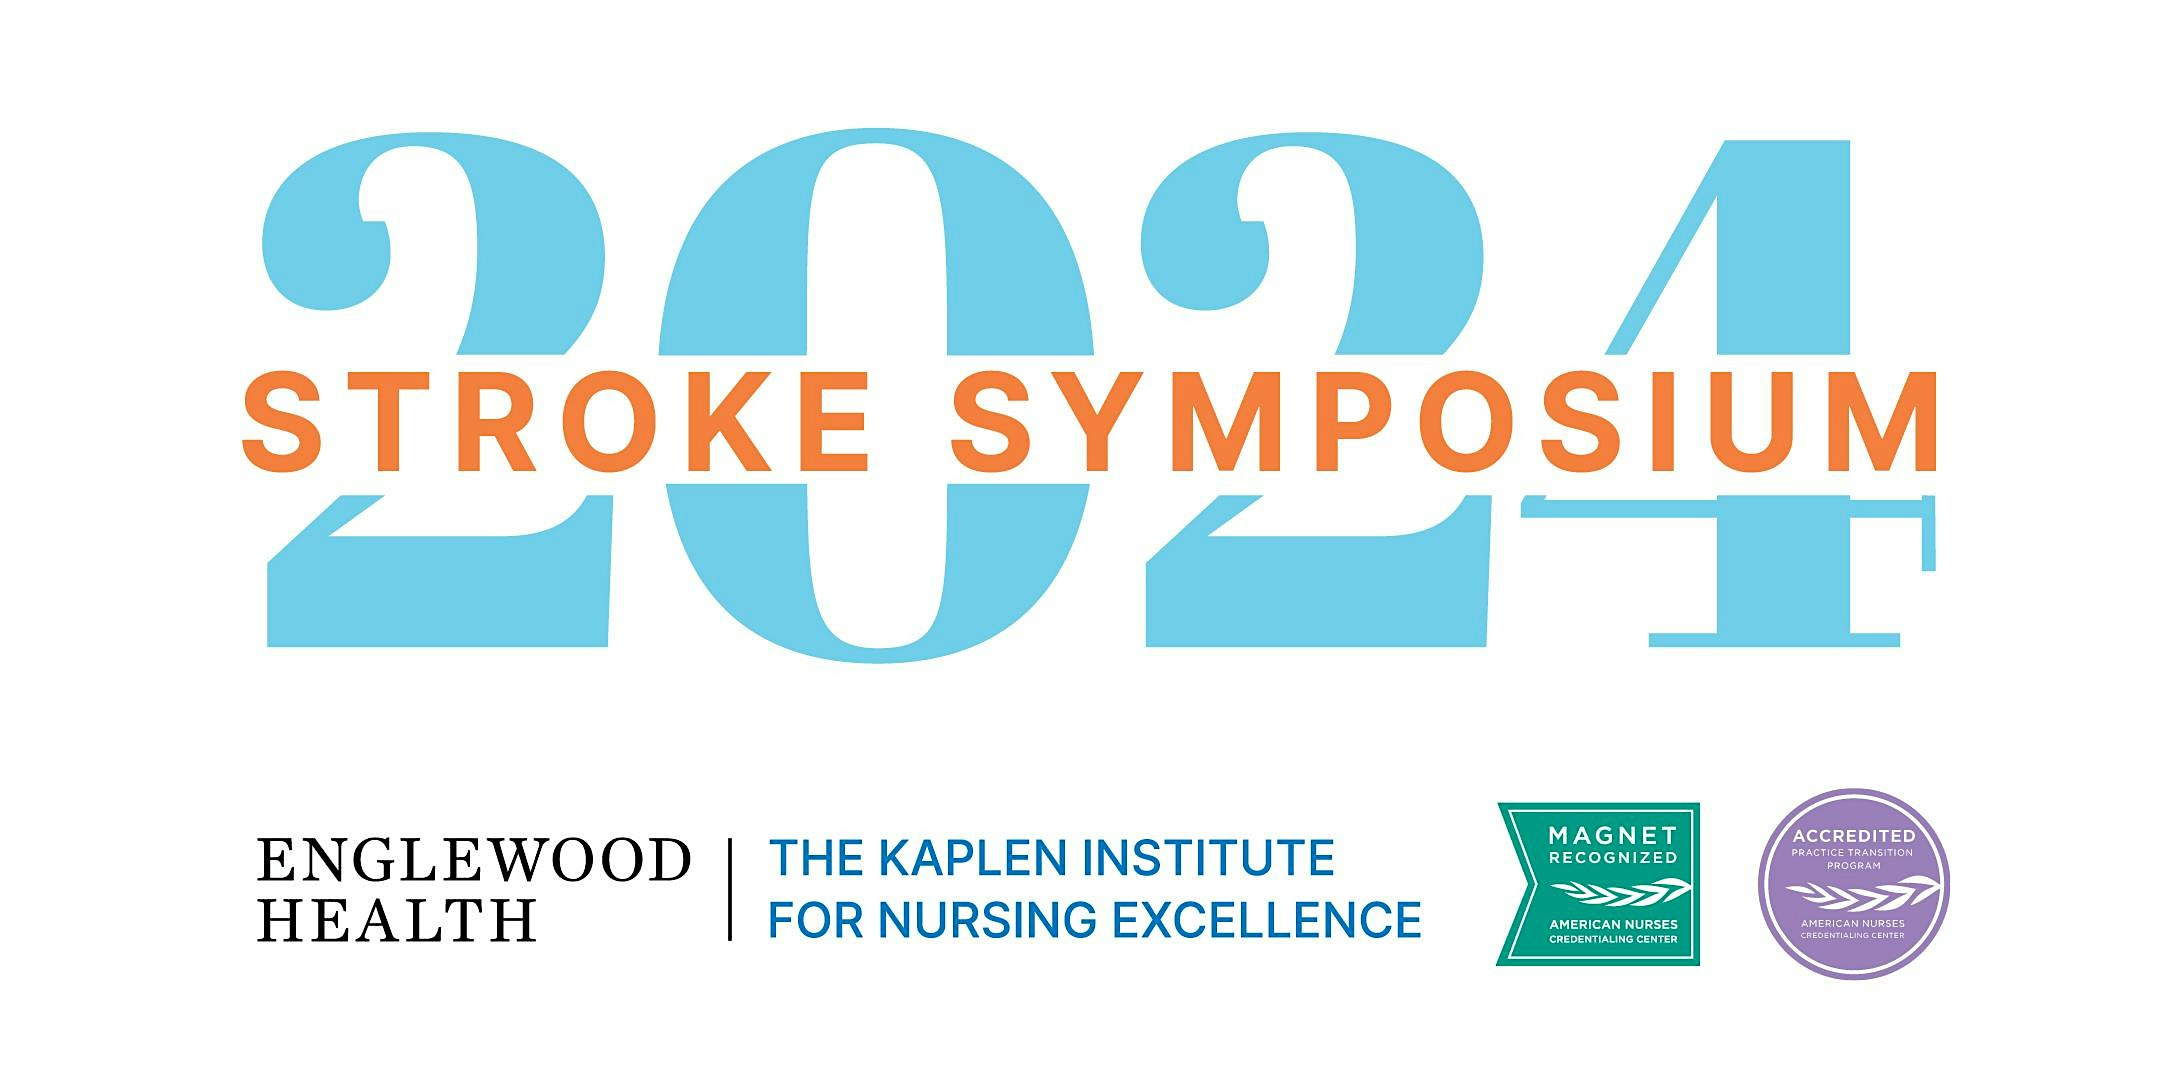 More info: Englewood Health 2024 Stroke Symposium